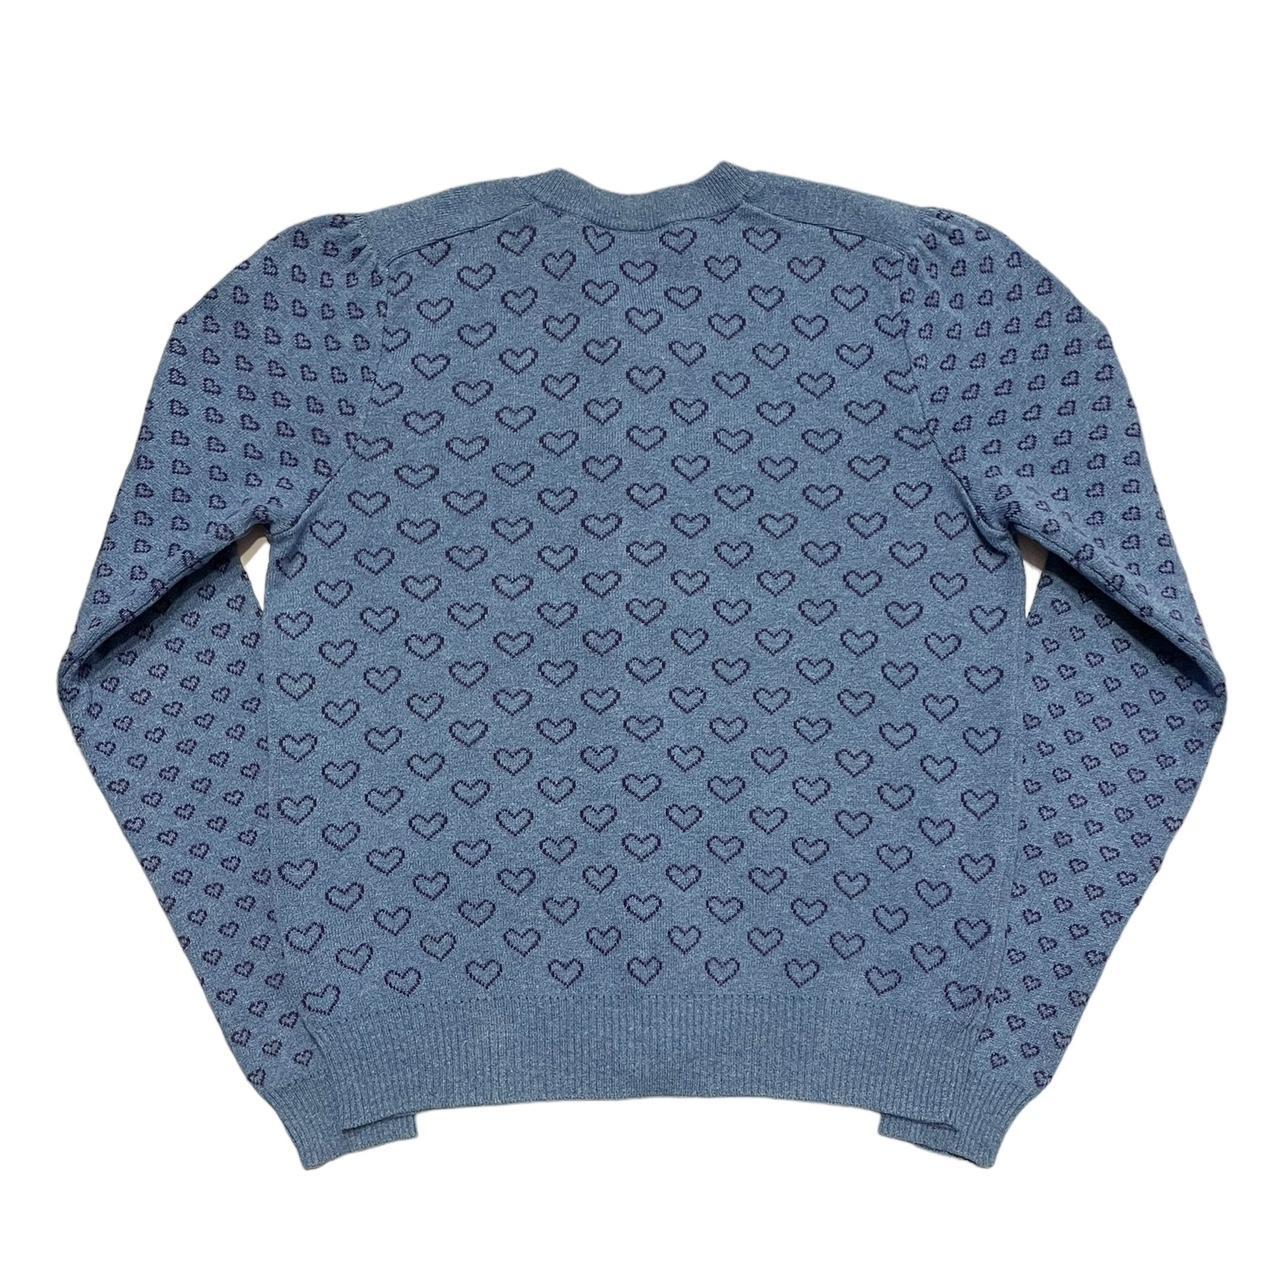 Louis Vuitton Blue & Green Gradient Monogram Sweater